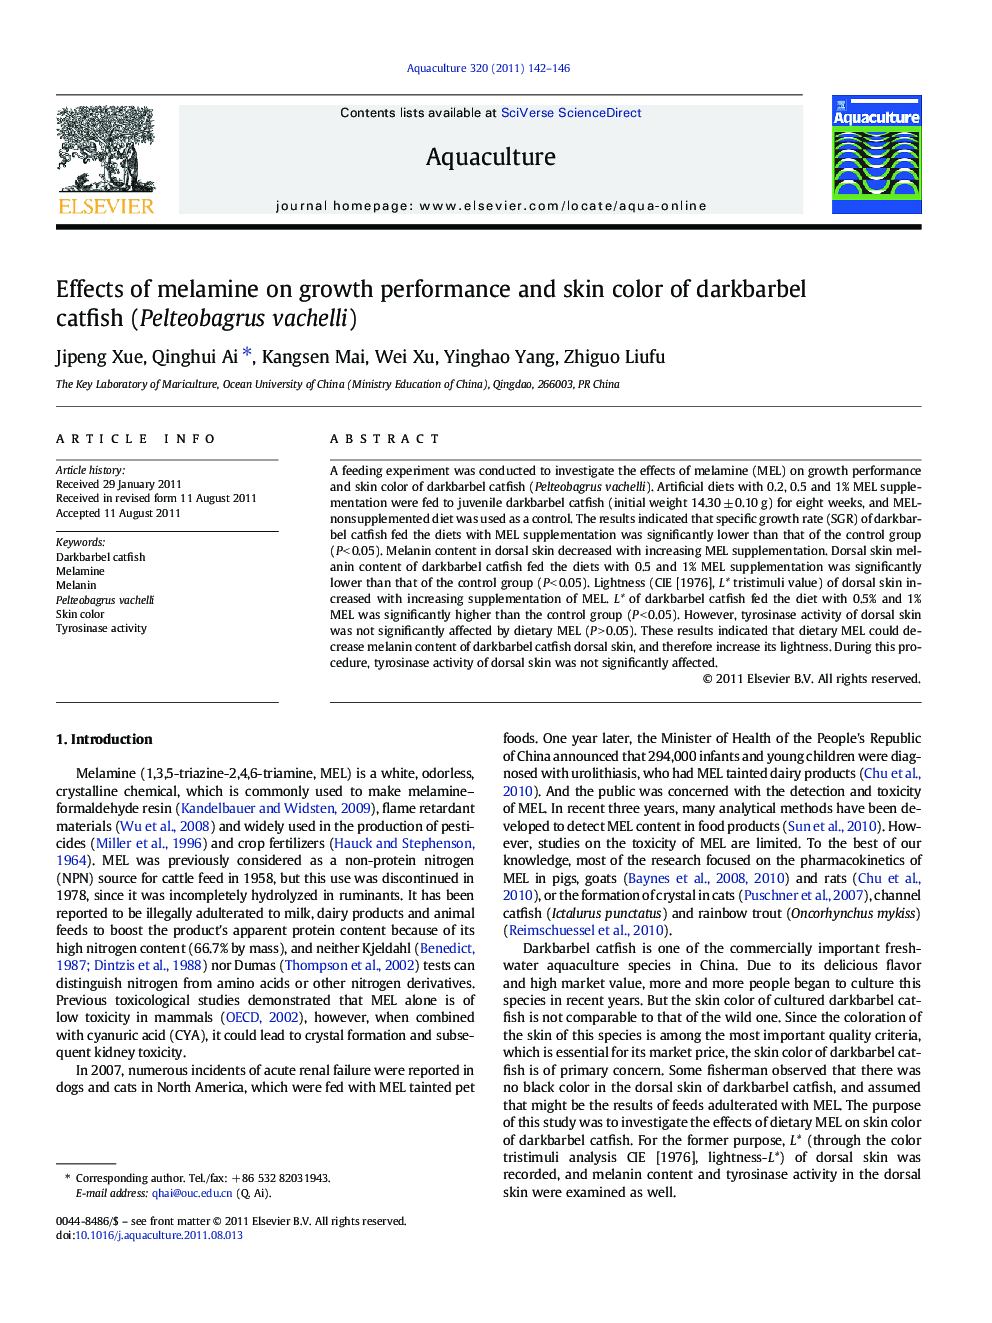 Effects of melamine on growth performance and skin color of darkbarbel catfish (Pelteobagrus vachelli)